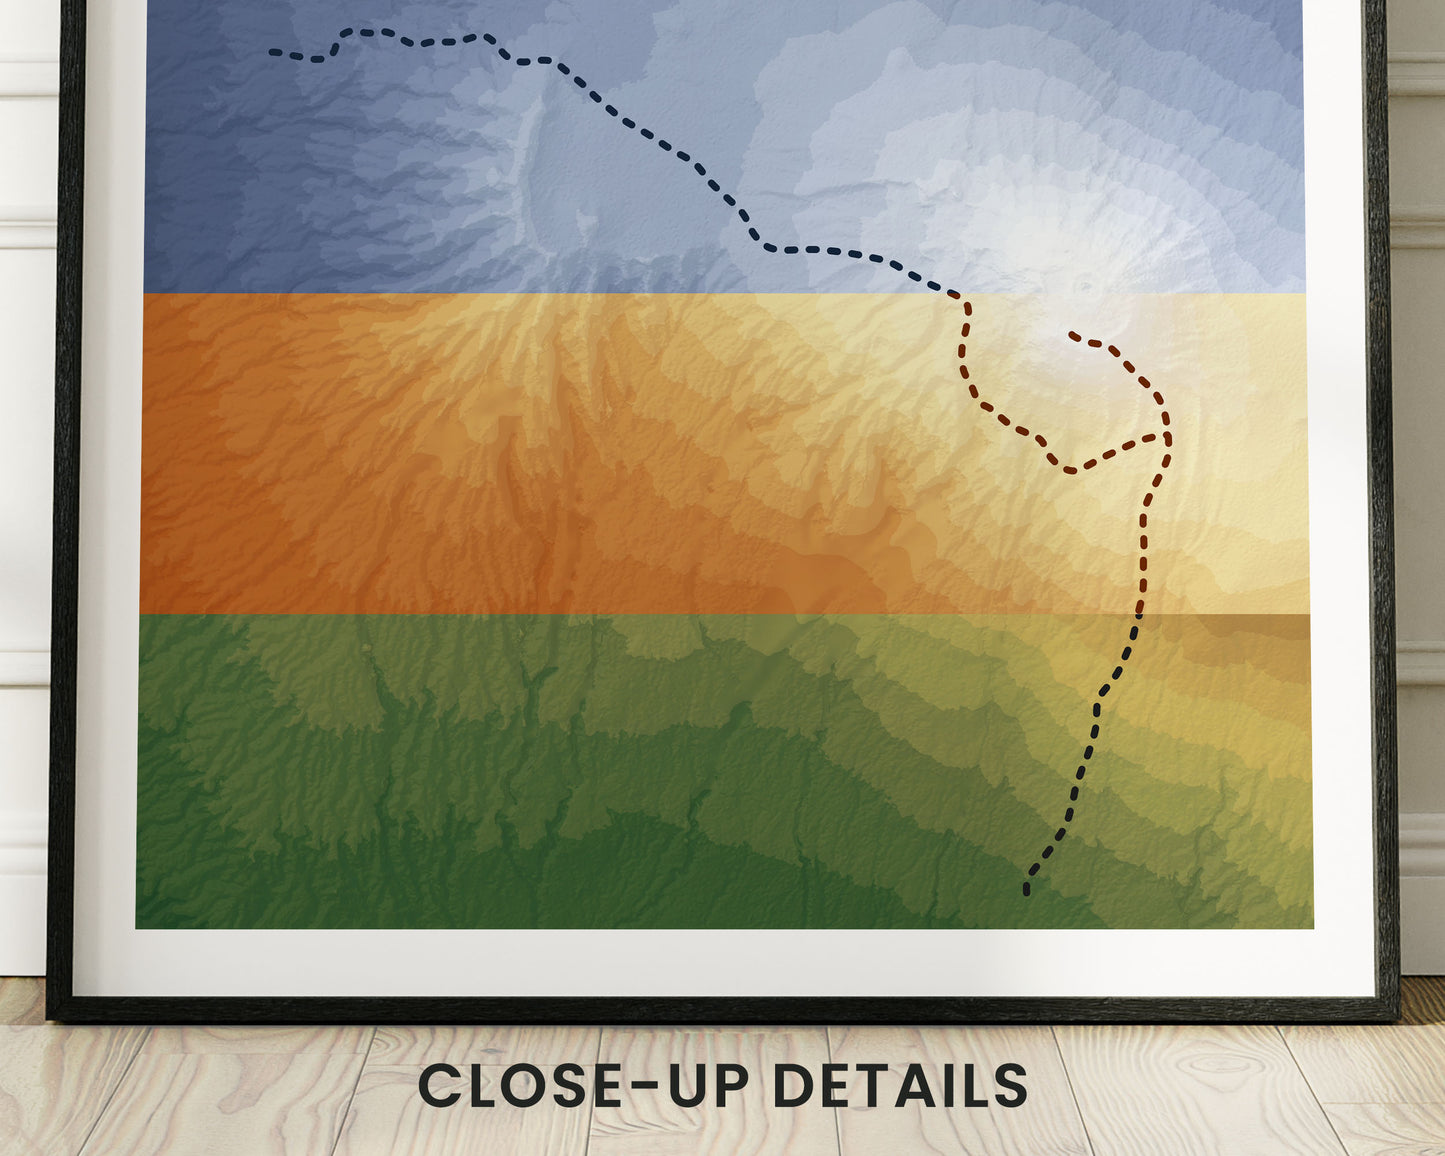 Lemosho Route (Mount Kilimanjaro) Topographic Map Poster